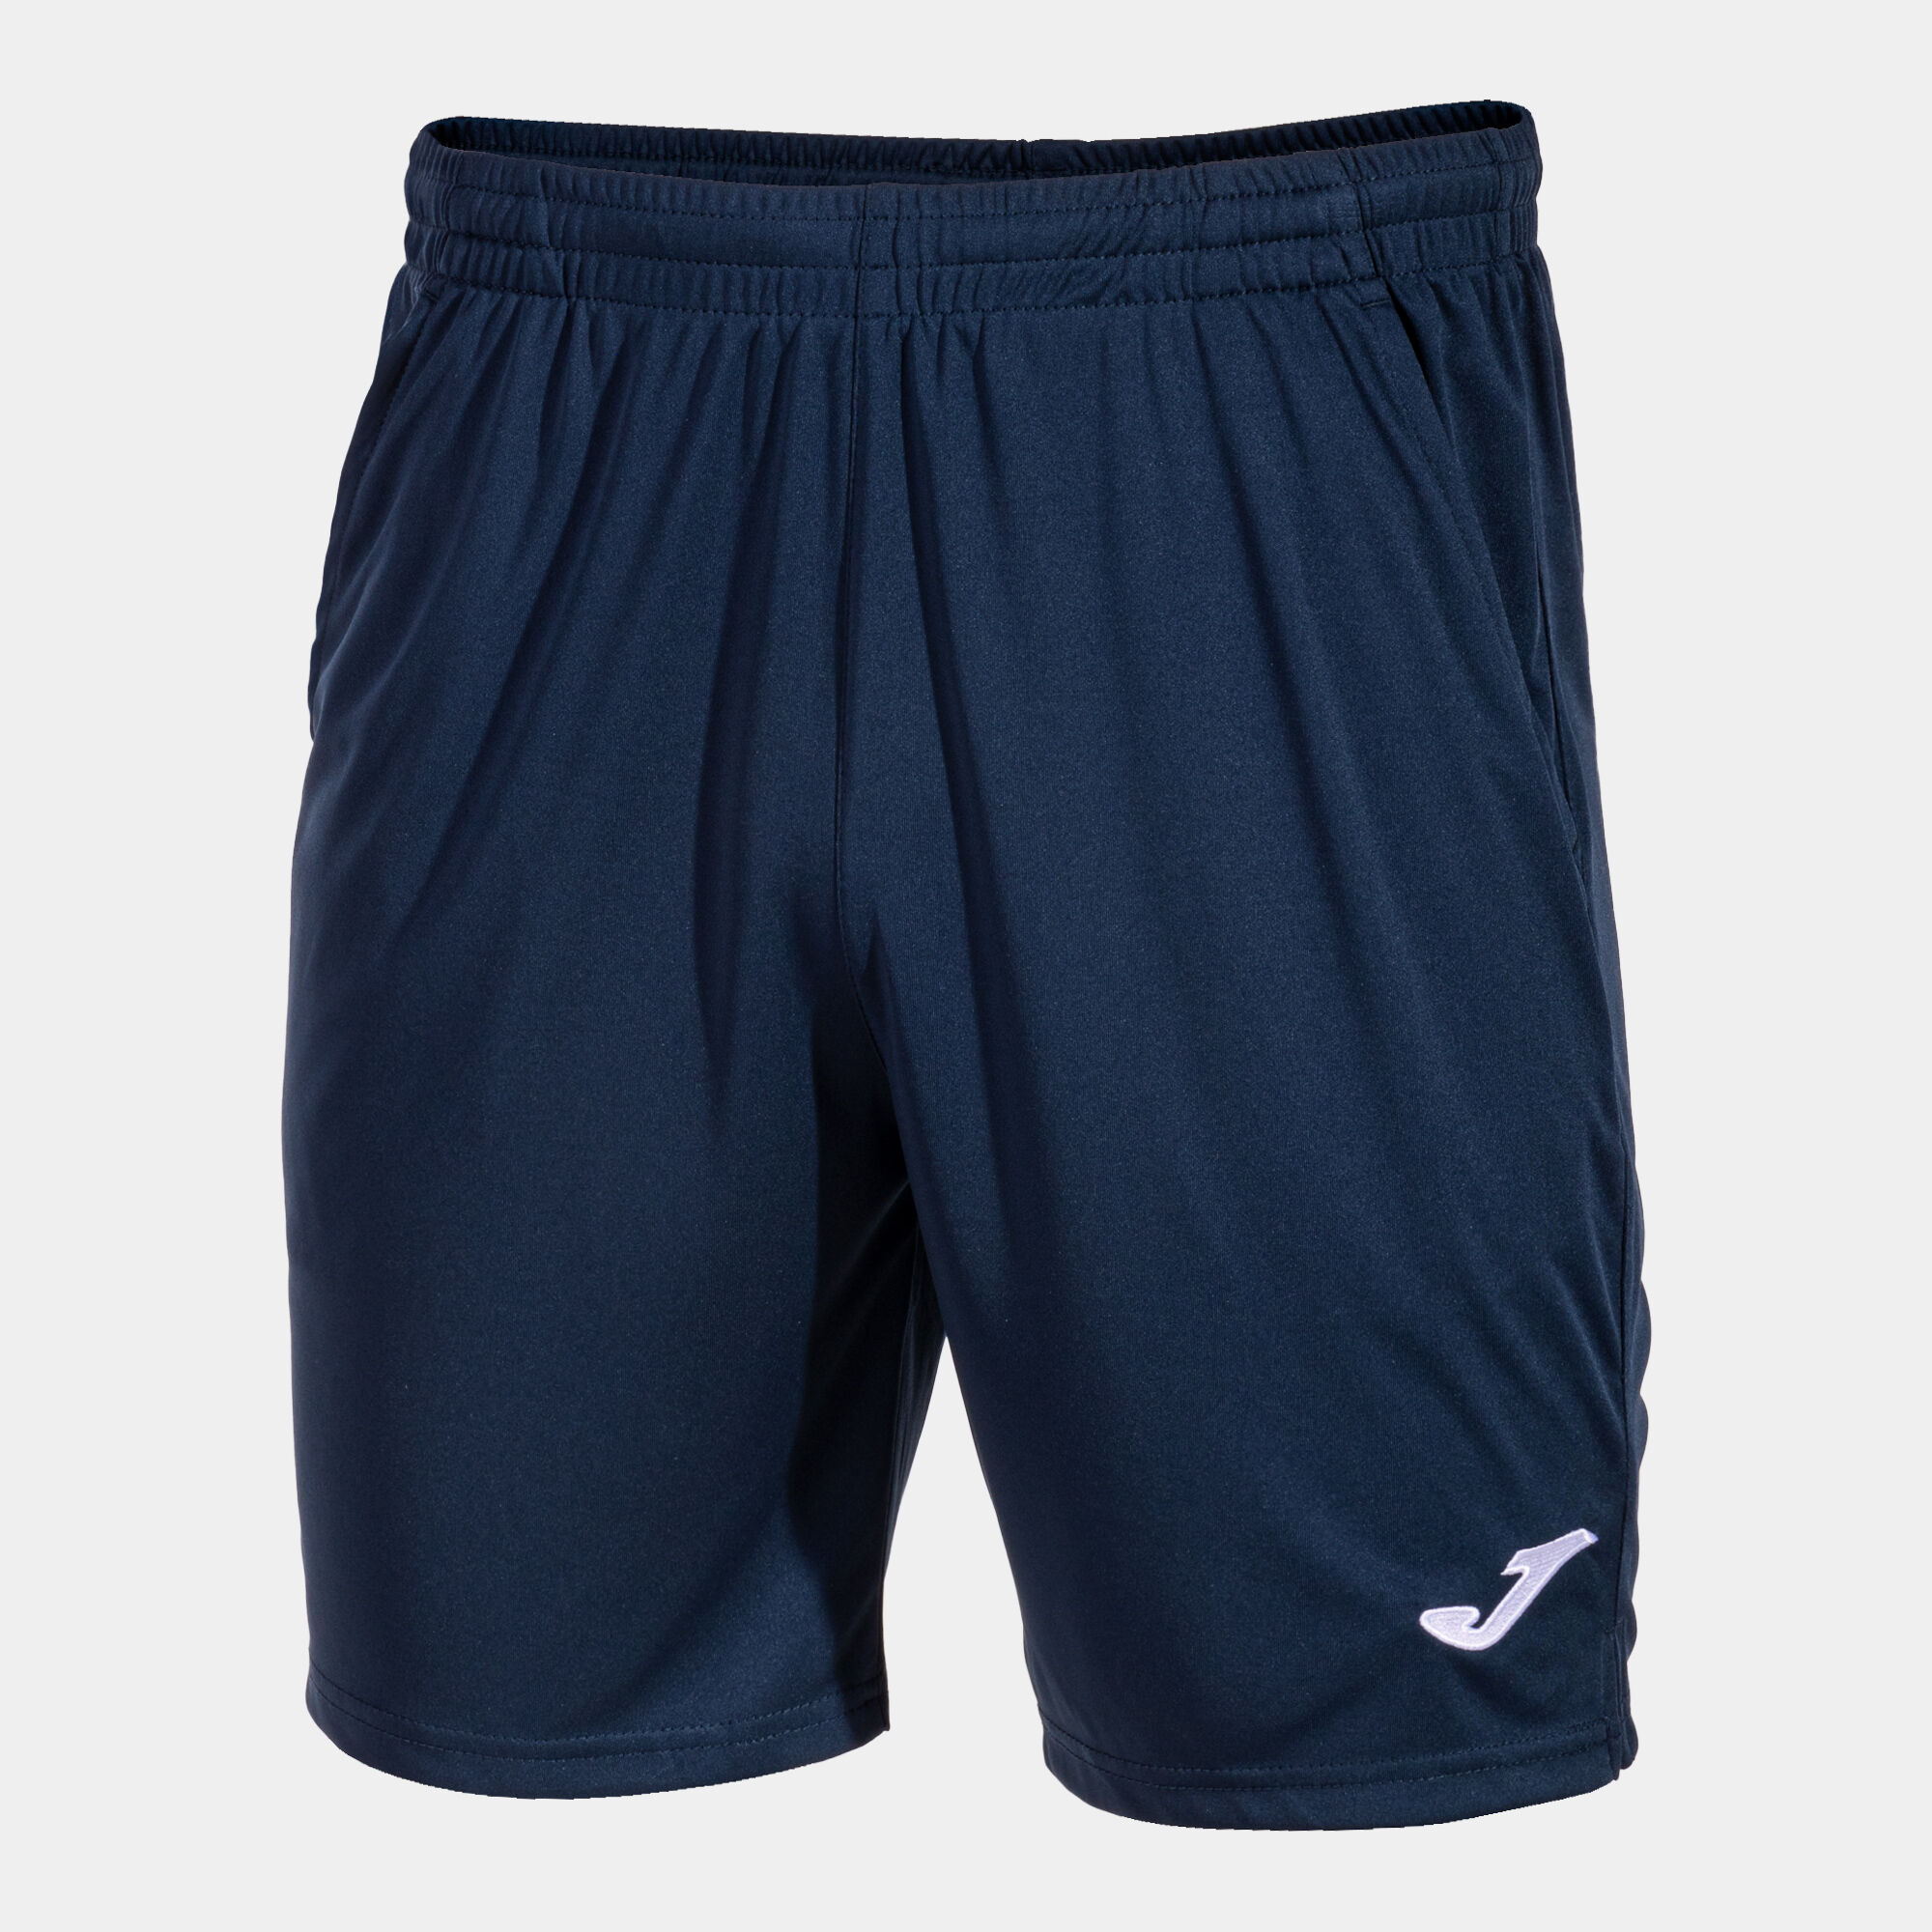 Bermuda shorts man Drive navy blue